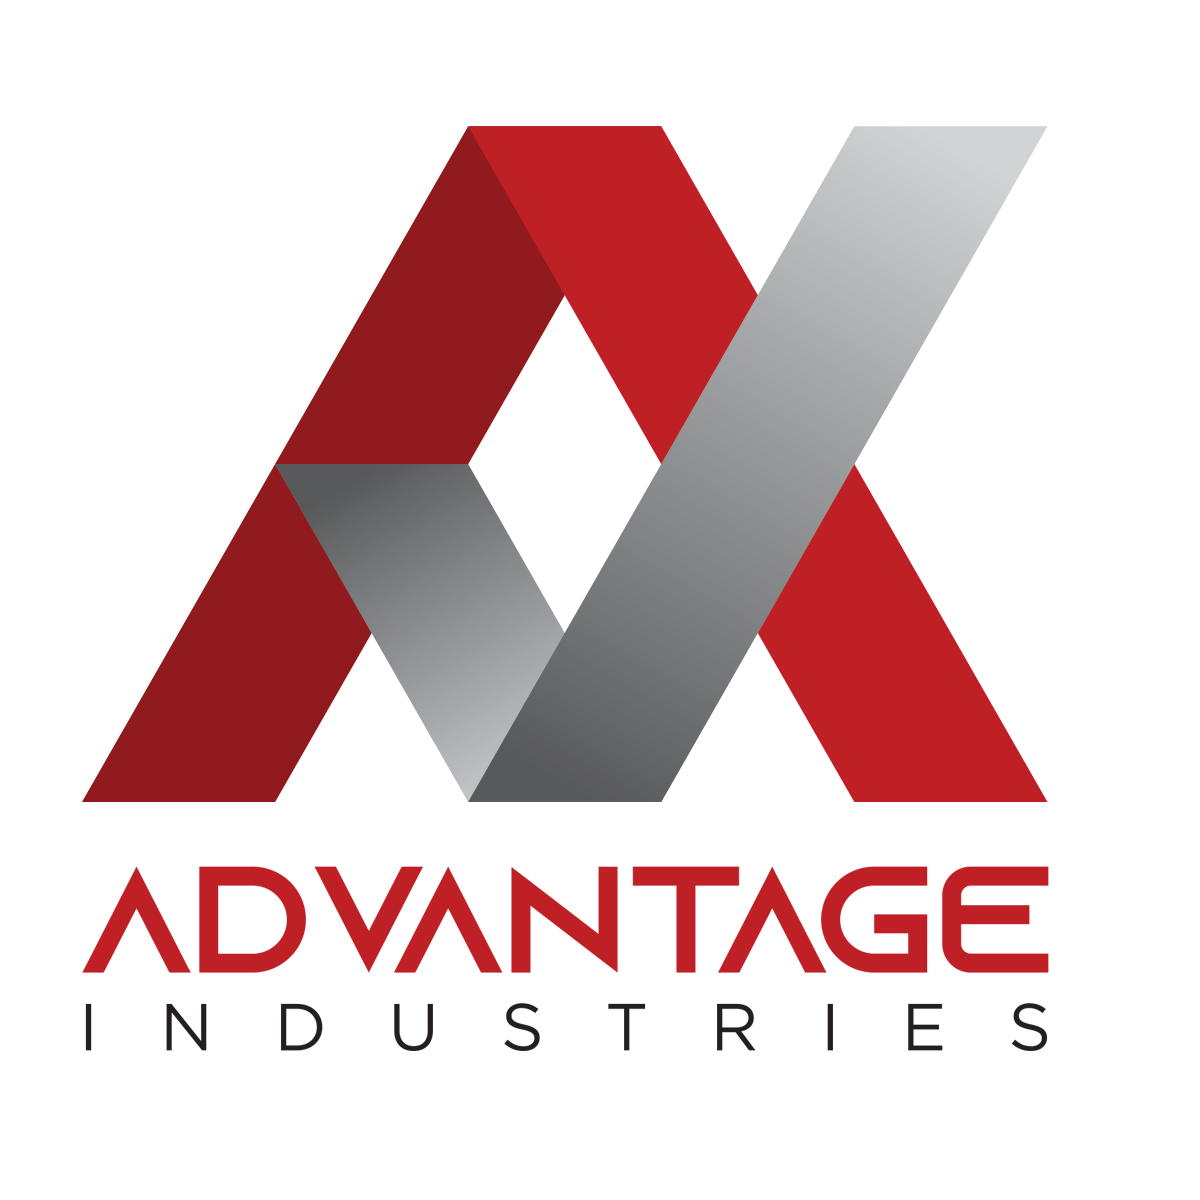 Advantage Industries